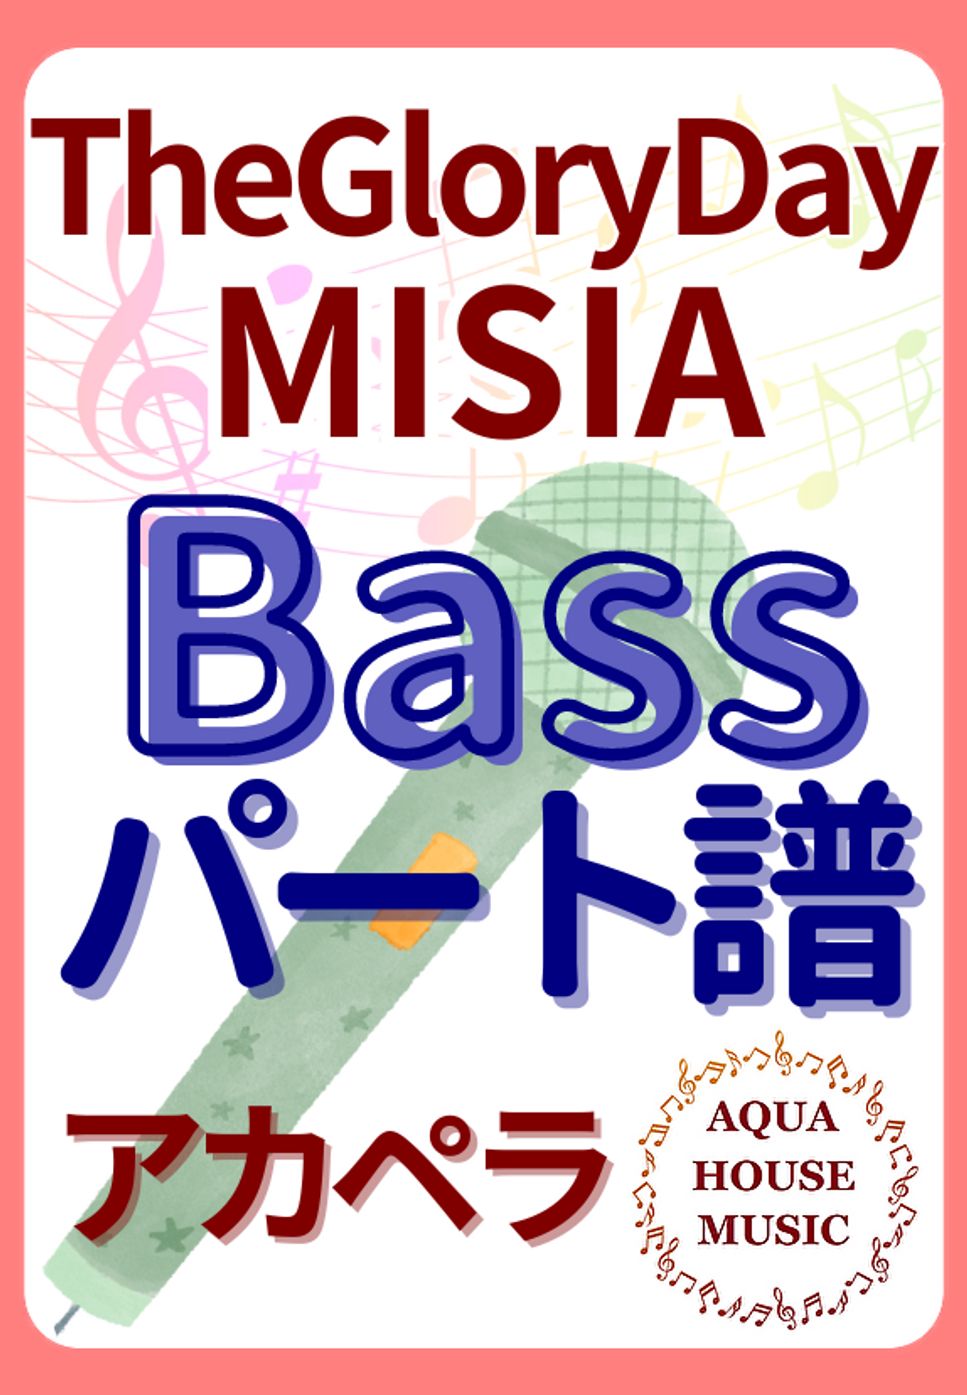 MISIA - The Glory Day (アカペラ楽譜♪Bassパート譜) by 飯田 亜紗子